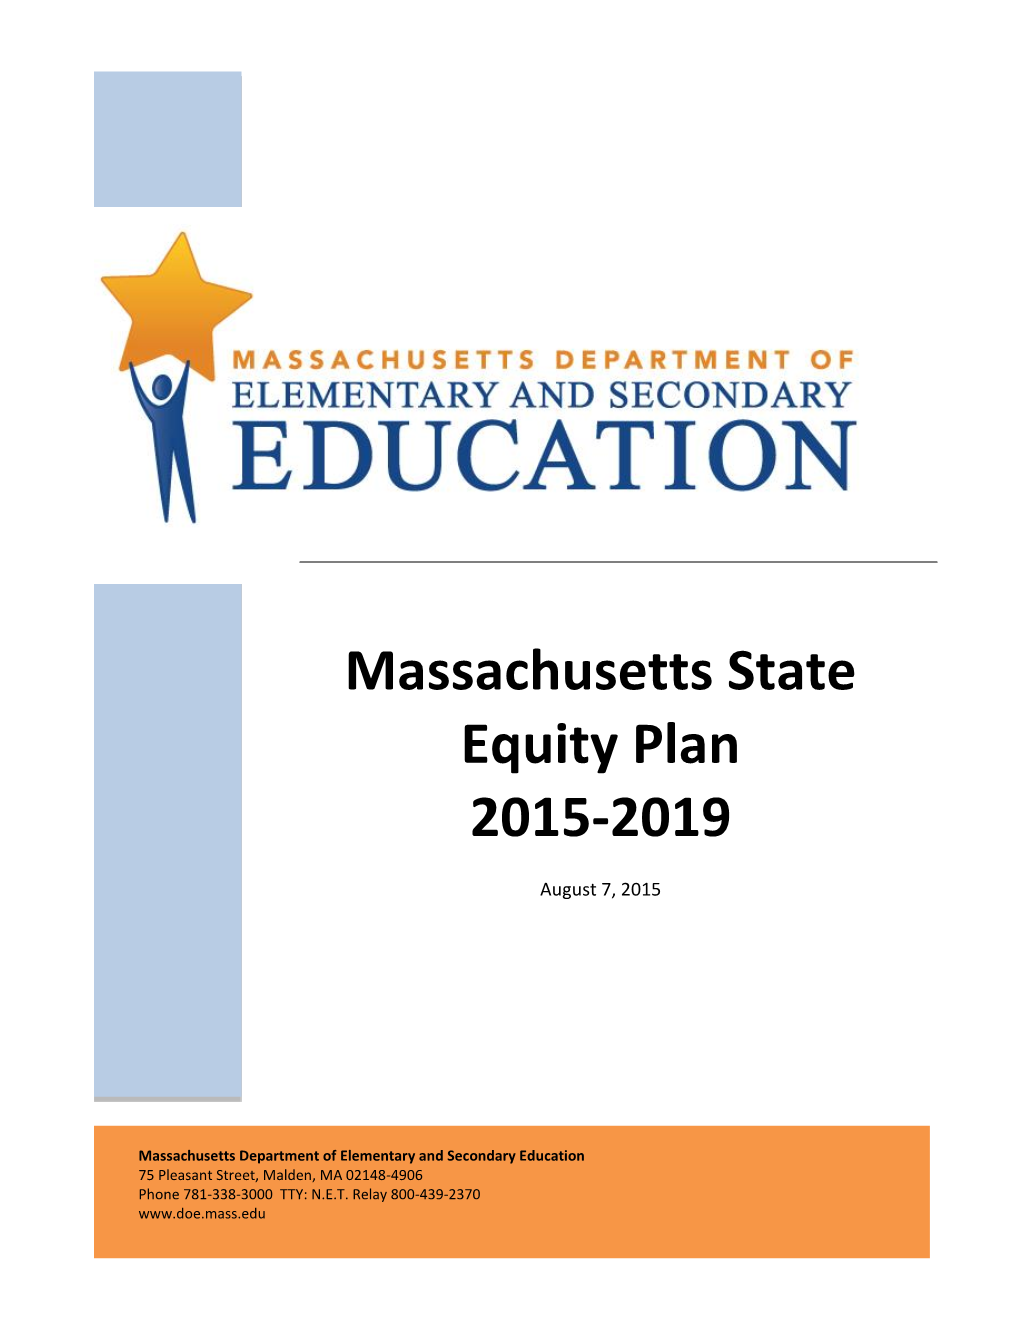 Massachusetts State Equity Plan 2015-2019